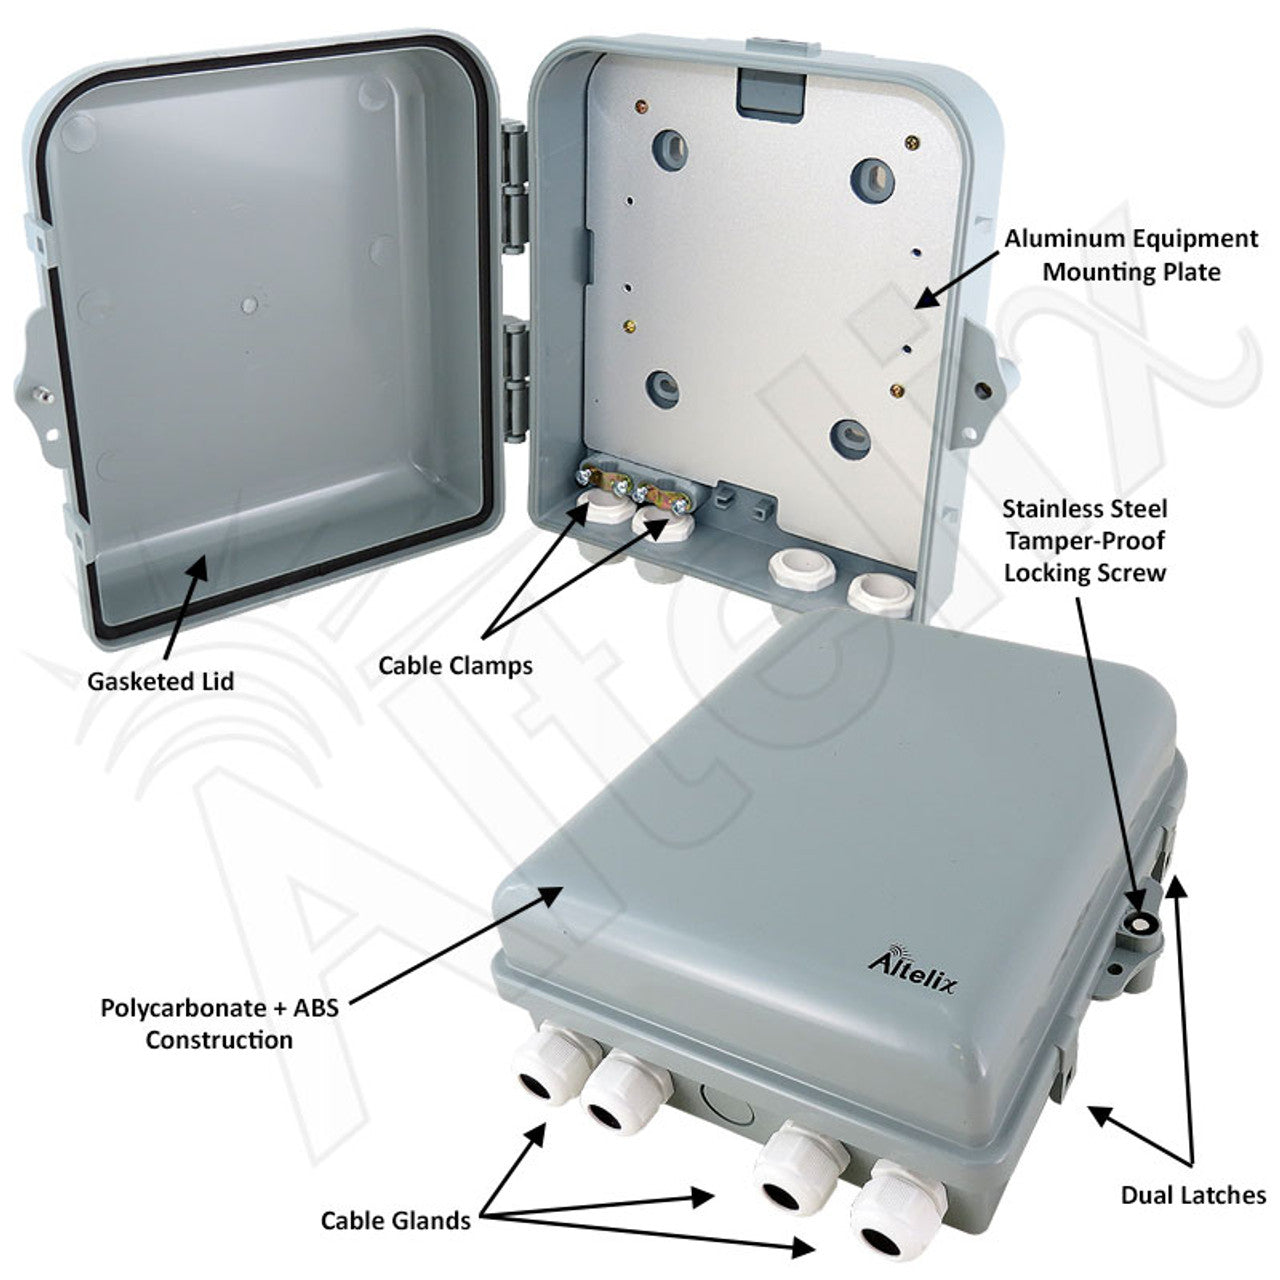 Altelix 10x9x4 IP66 NEMA 4X PC+ABS Weatherproof Utility Box with Hinged Door and Aluminum Mounting Plate - 0